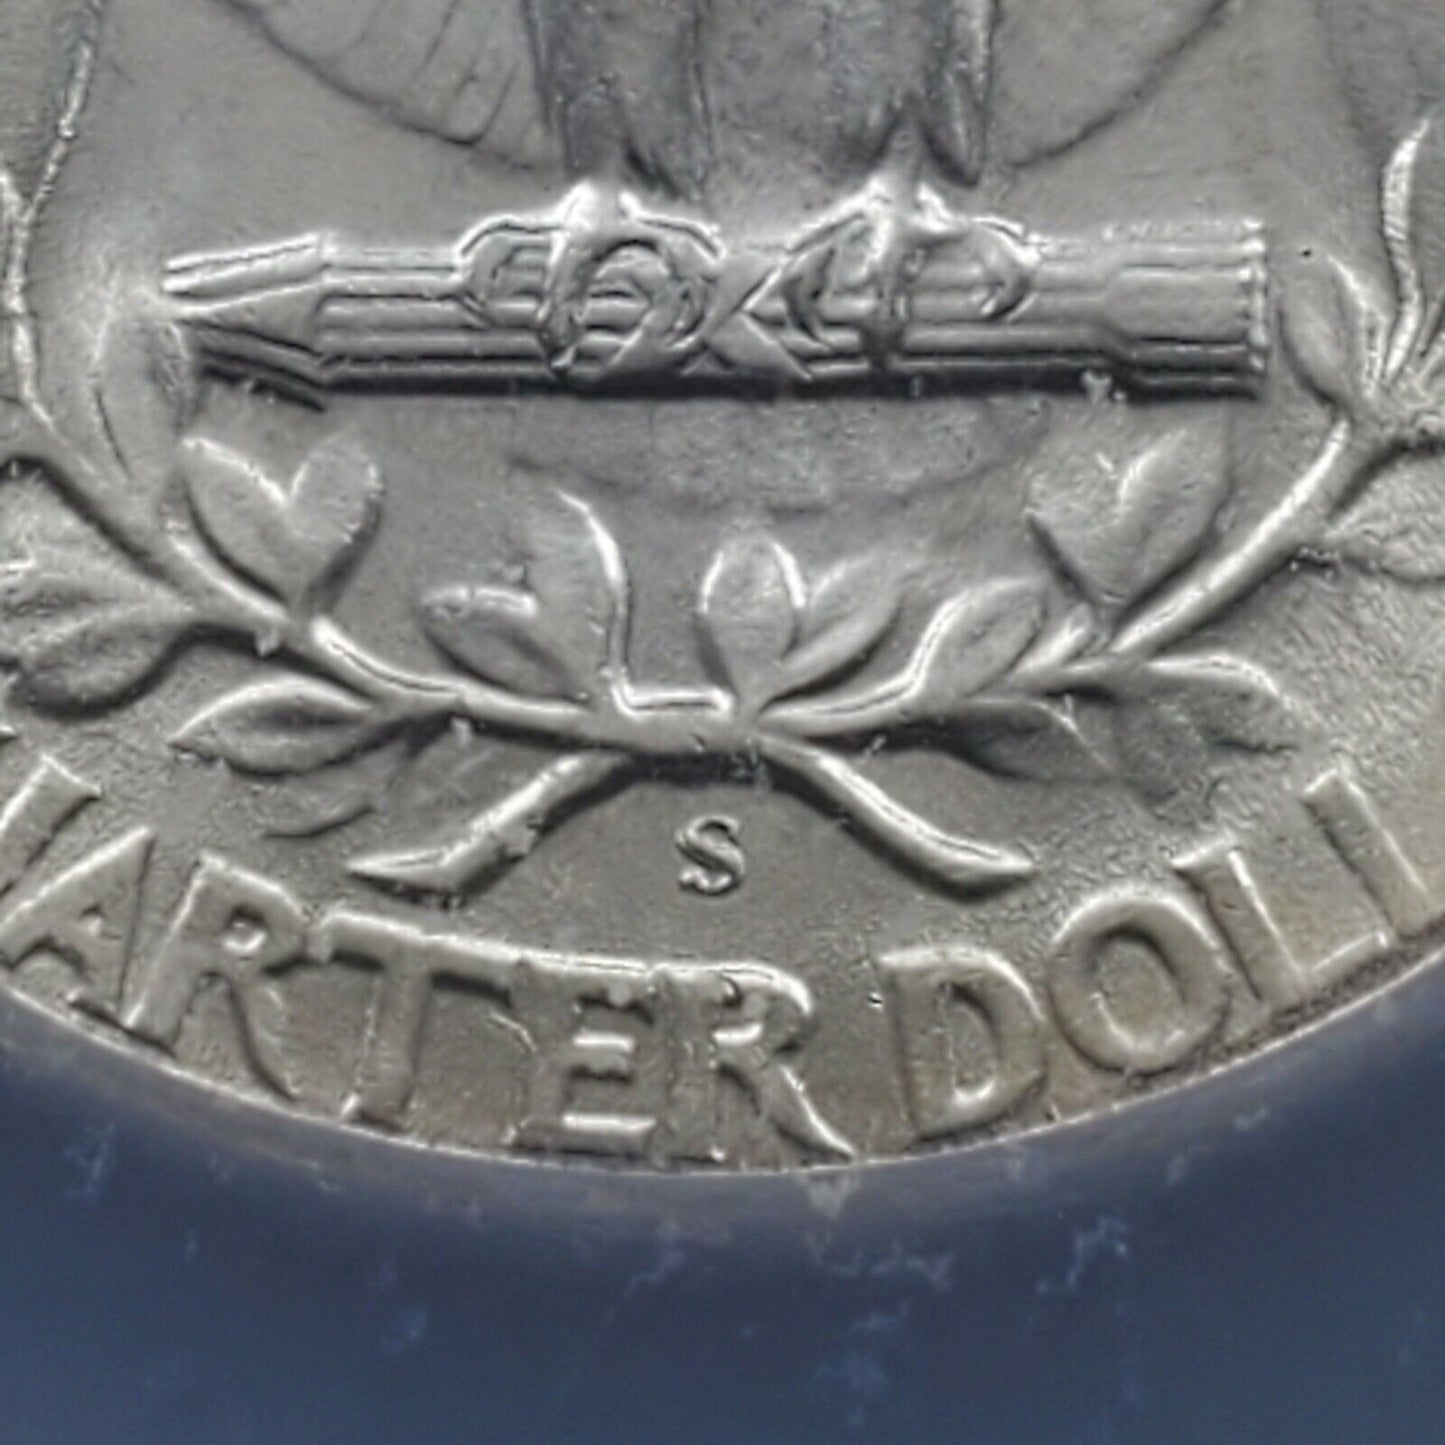 1947 S S/S Washington Silver Quarter Variety Coin ICG MS67 RPM 001 FS-501